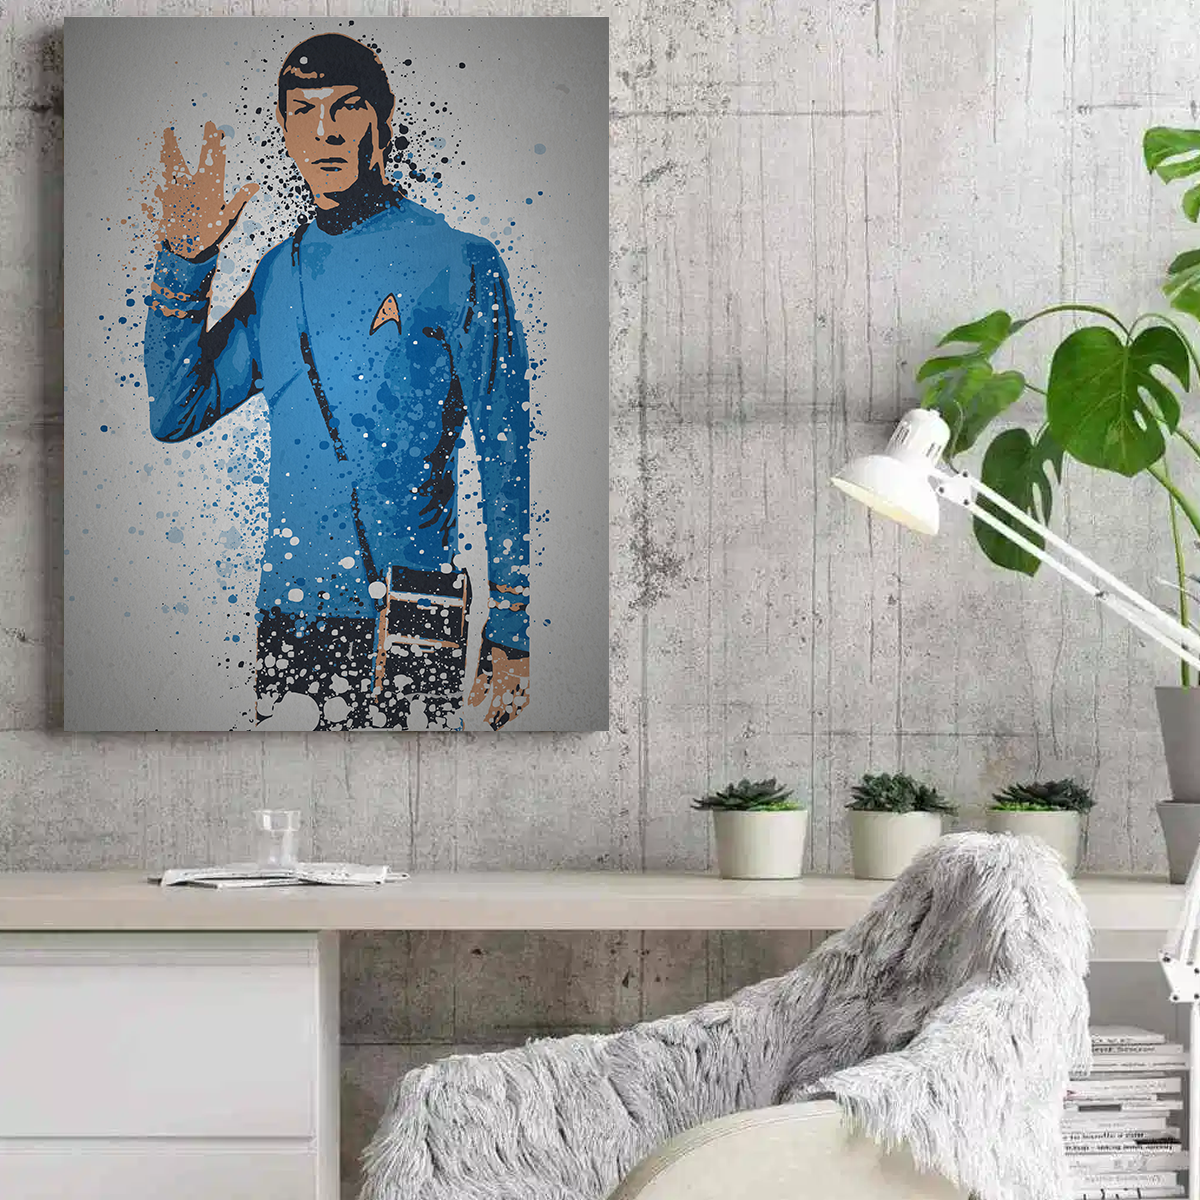 Live Long And Prosper